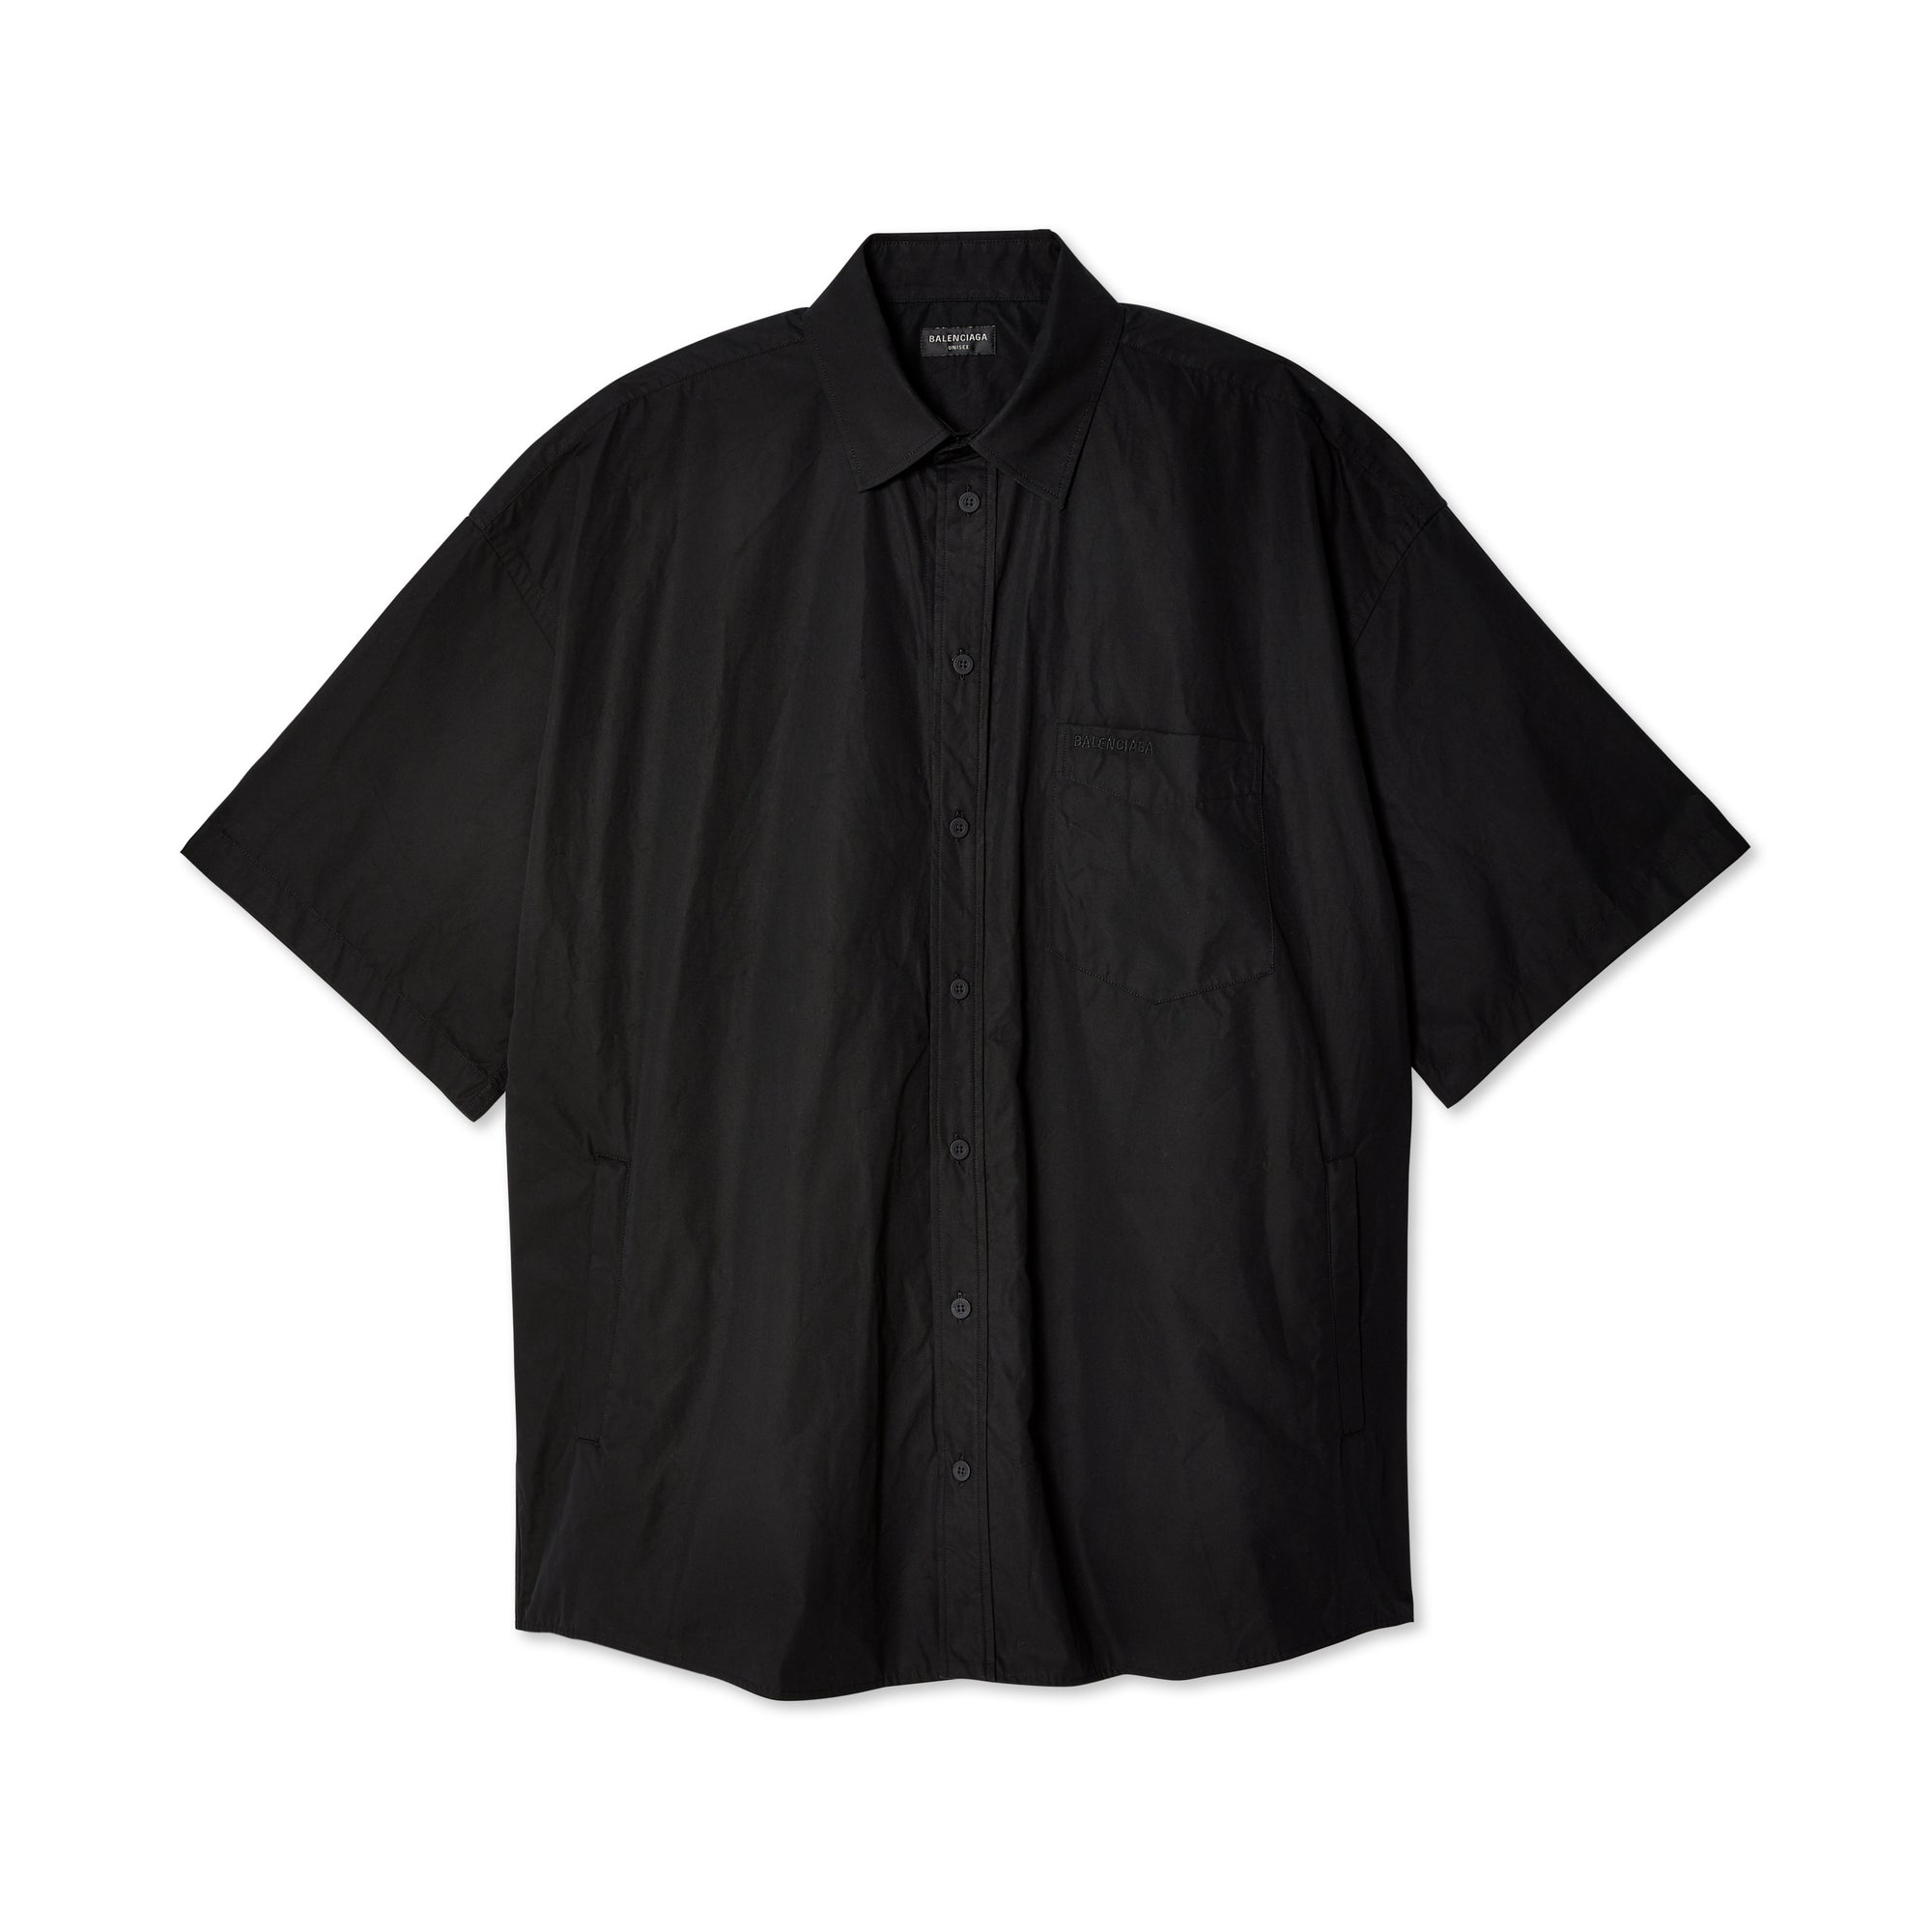 Balenciaga - Men's Short Sleeve Shirt - (Black) view 1